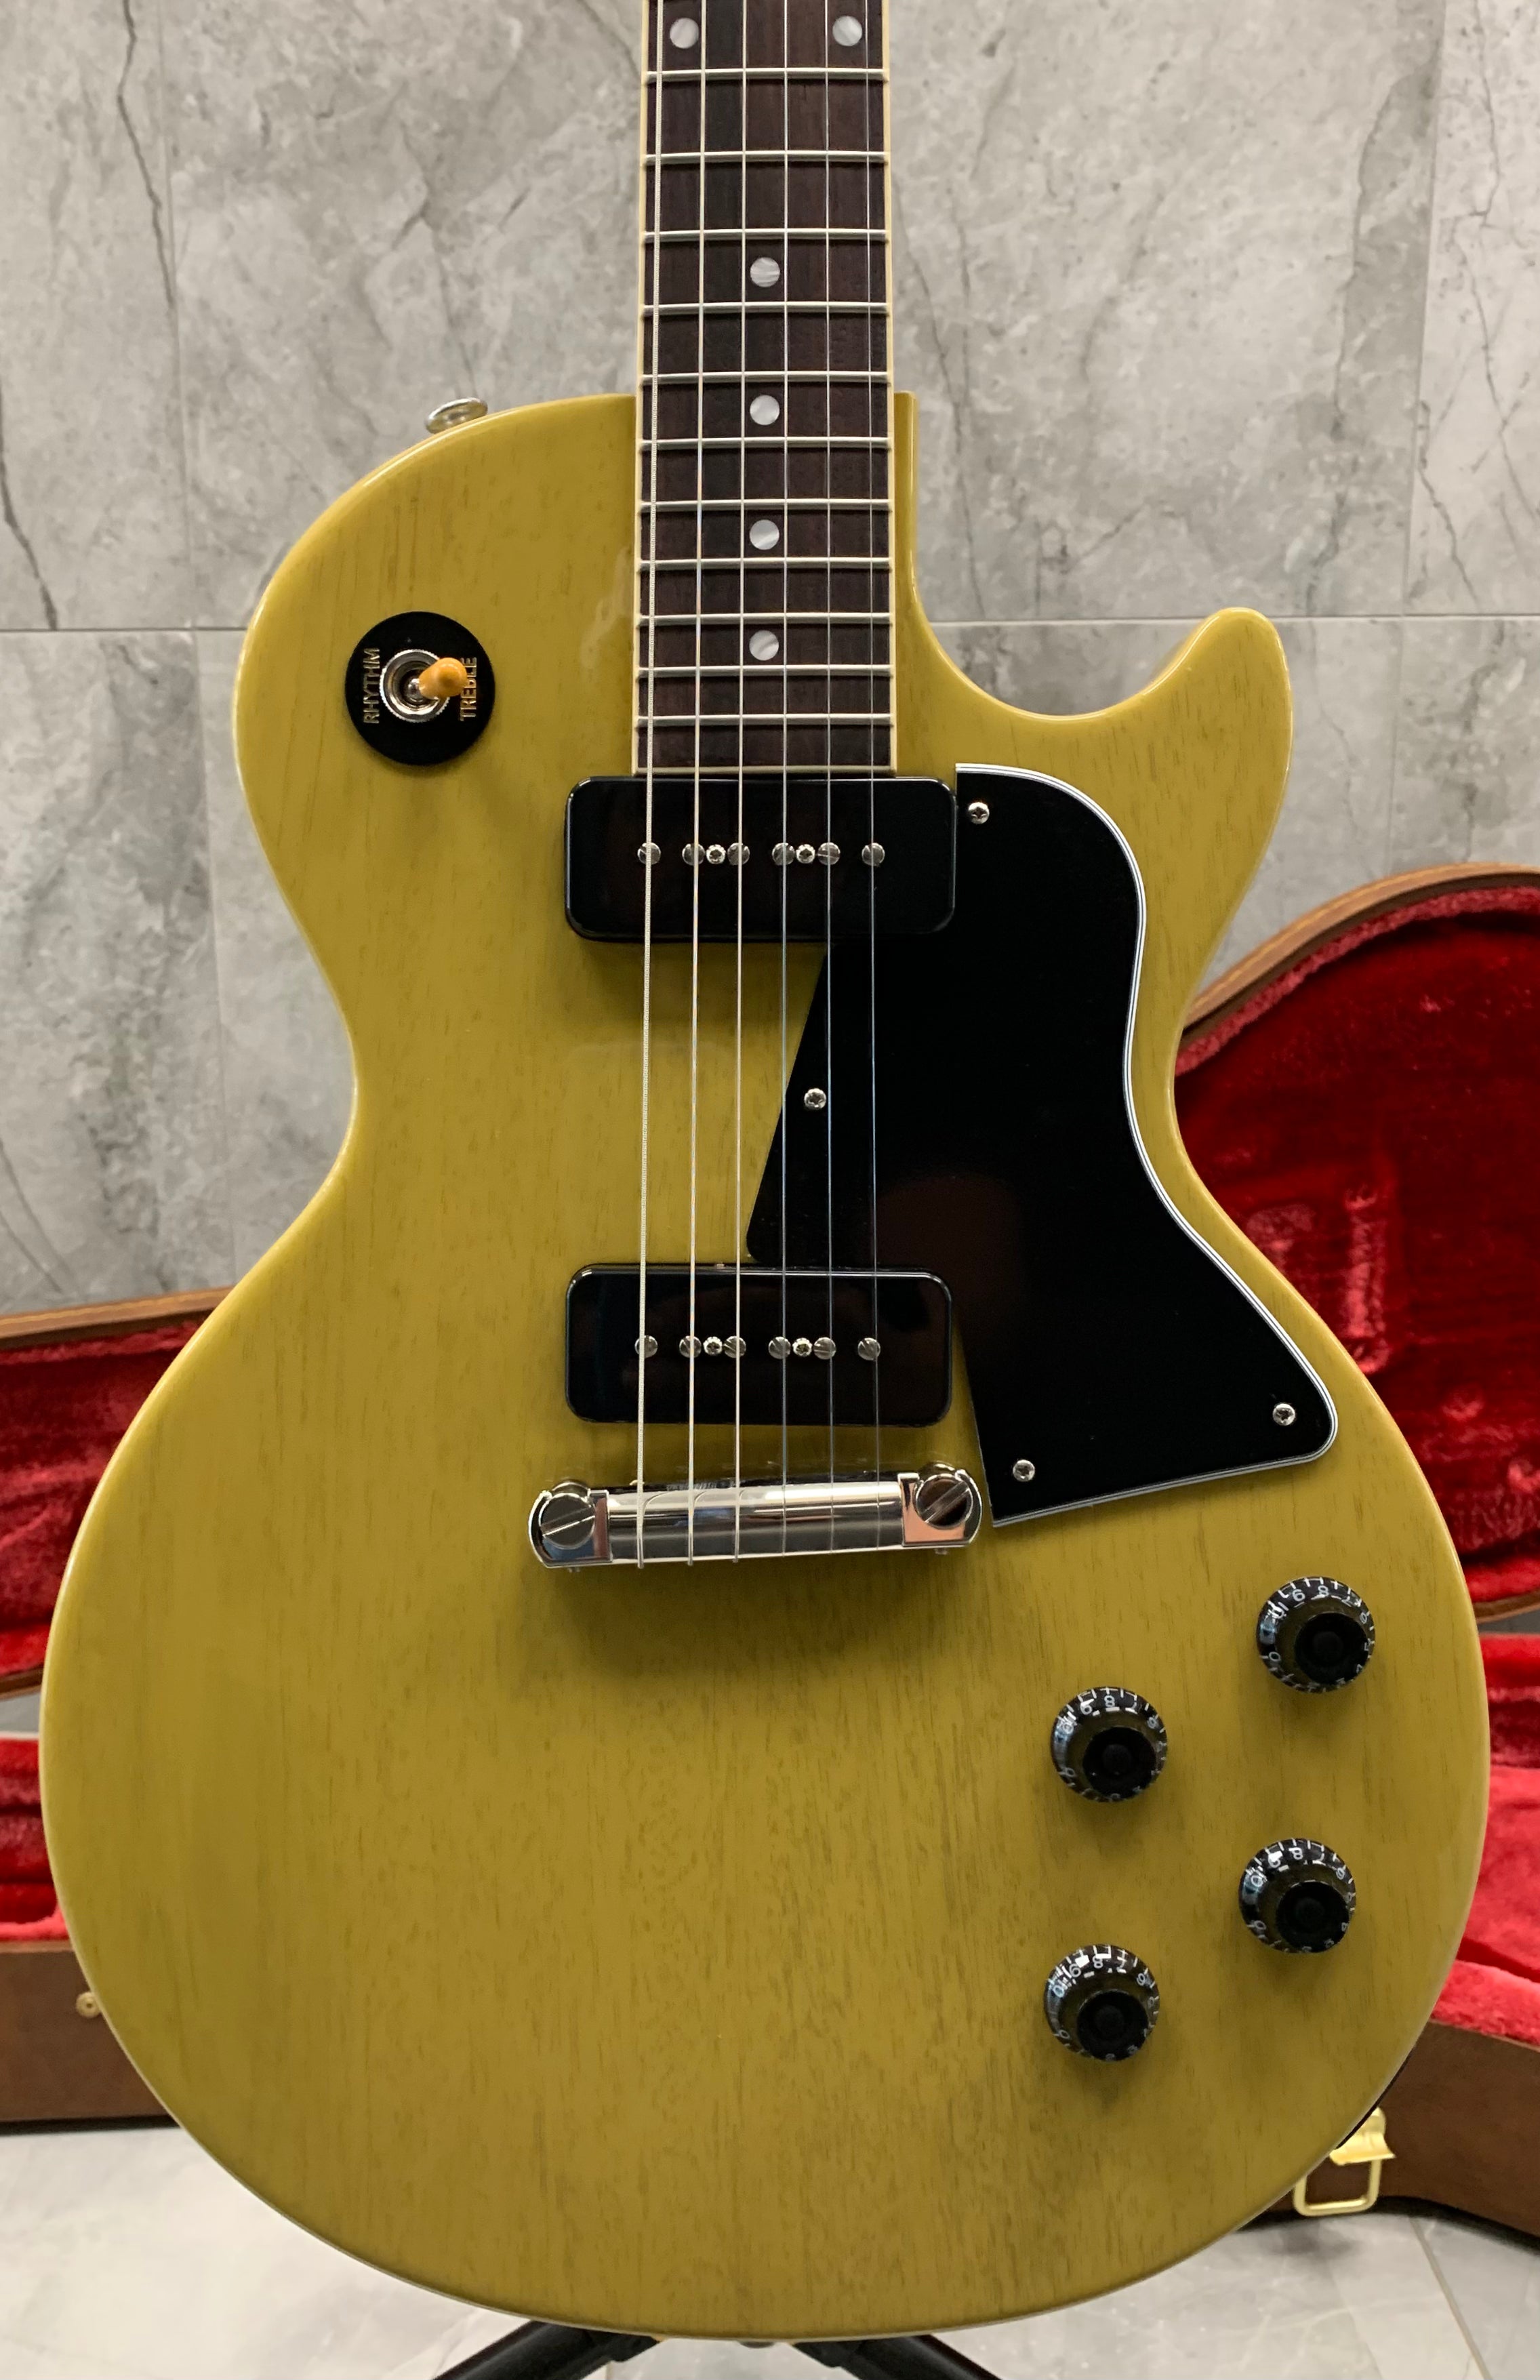 Gibson Les Paul TV yellow-